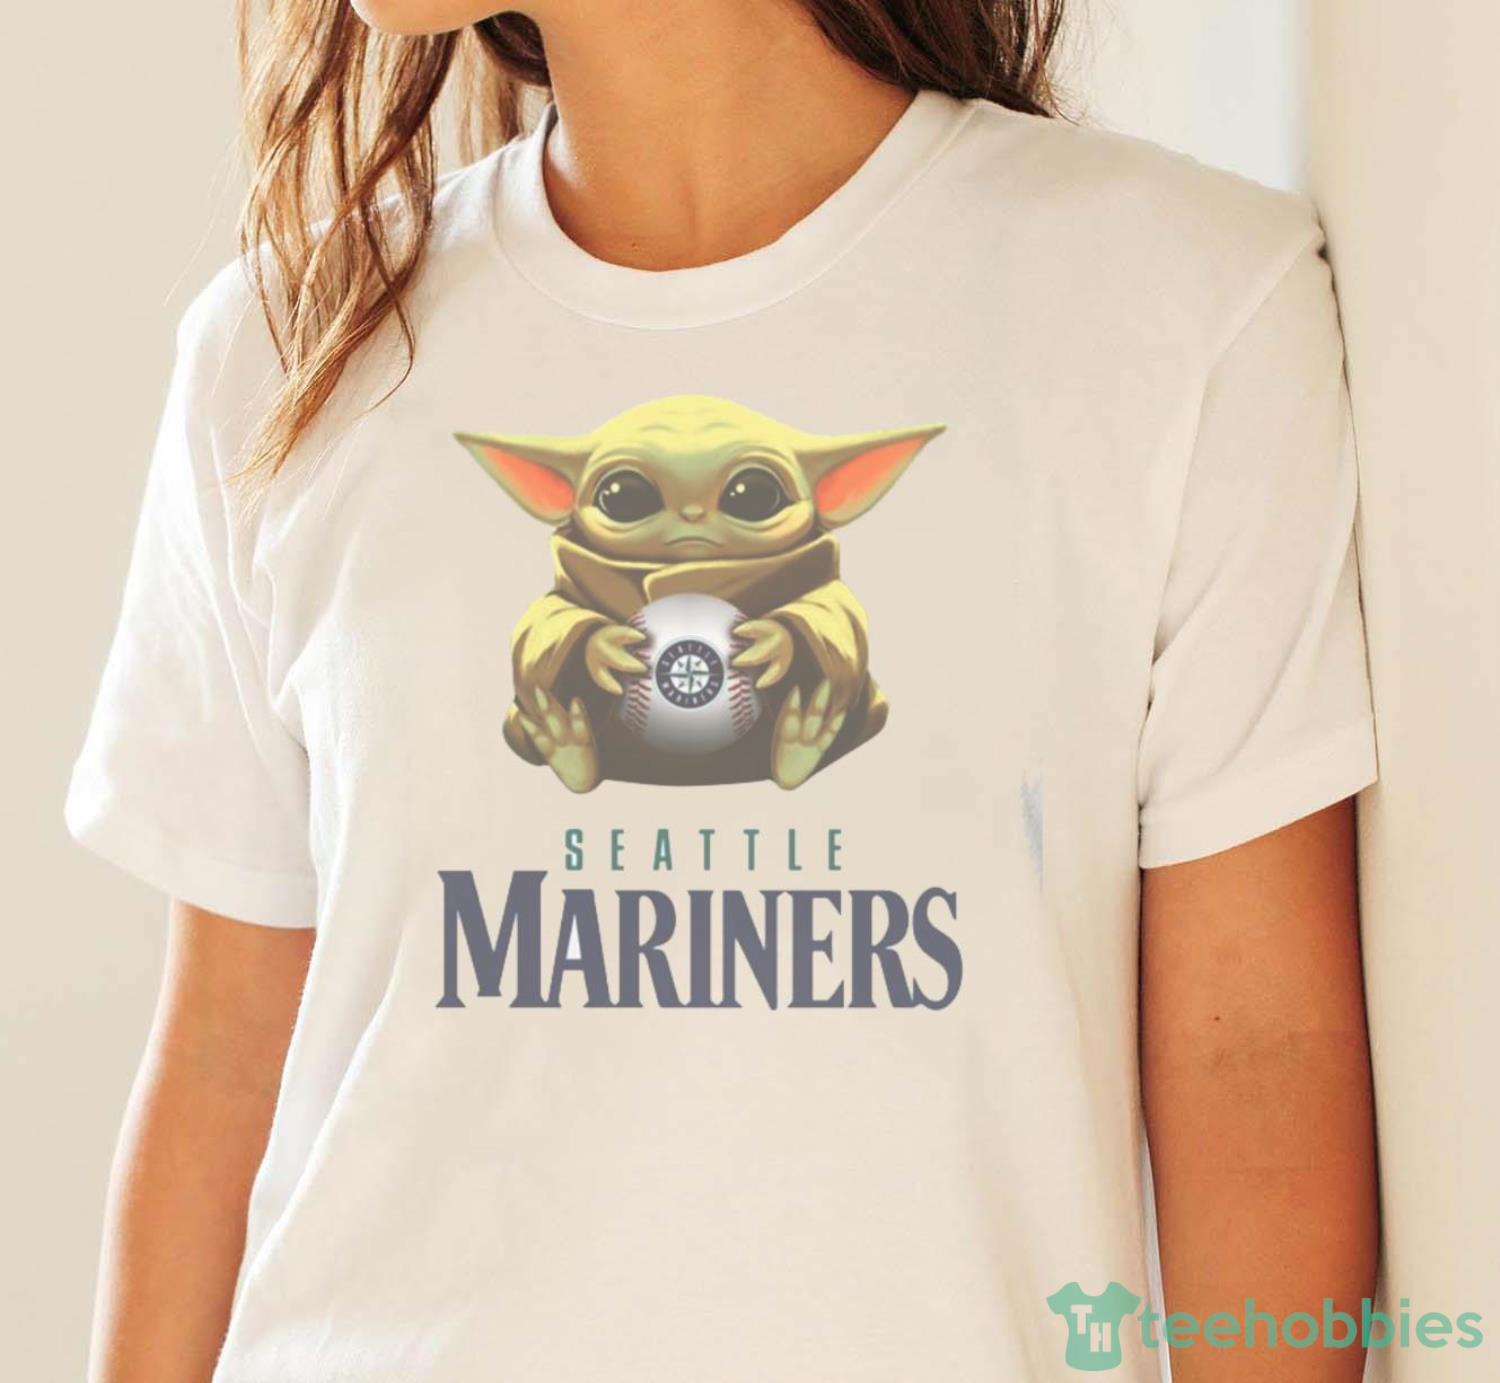 MLB Baseball Seattle Mariners Star Wars Baby Yoda Shirt T Shirt - White Ladies T-Shirt